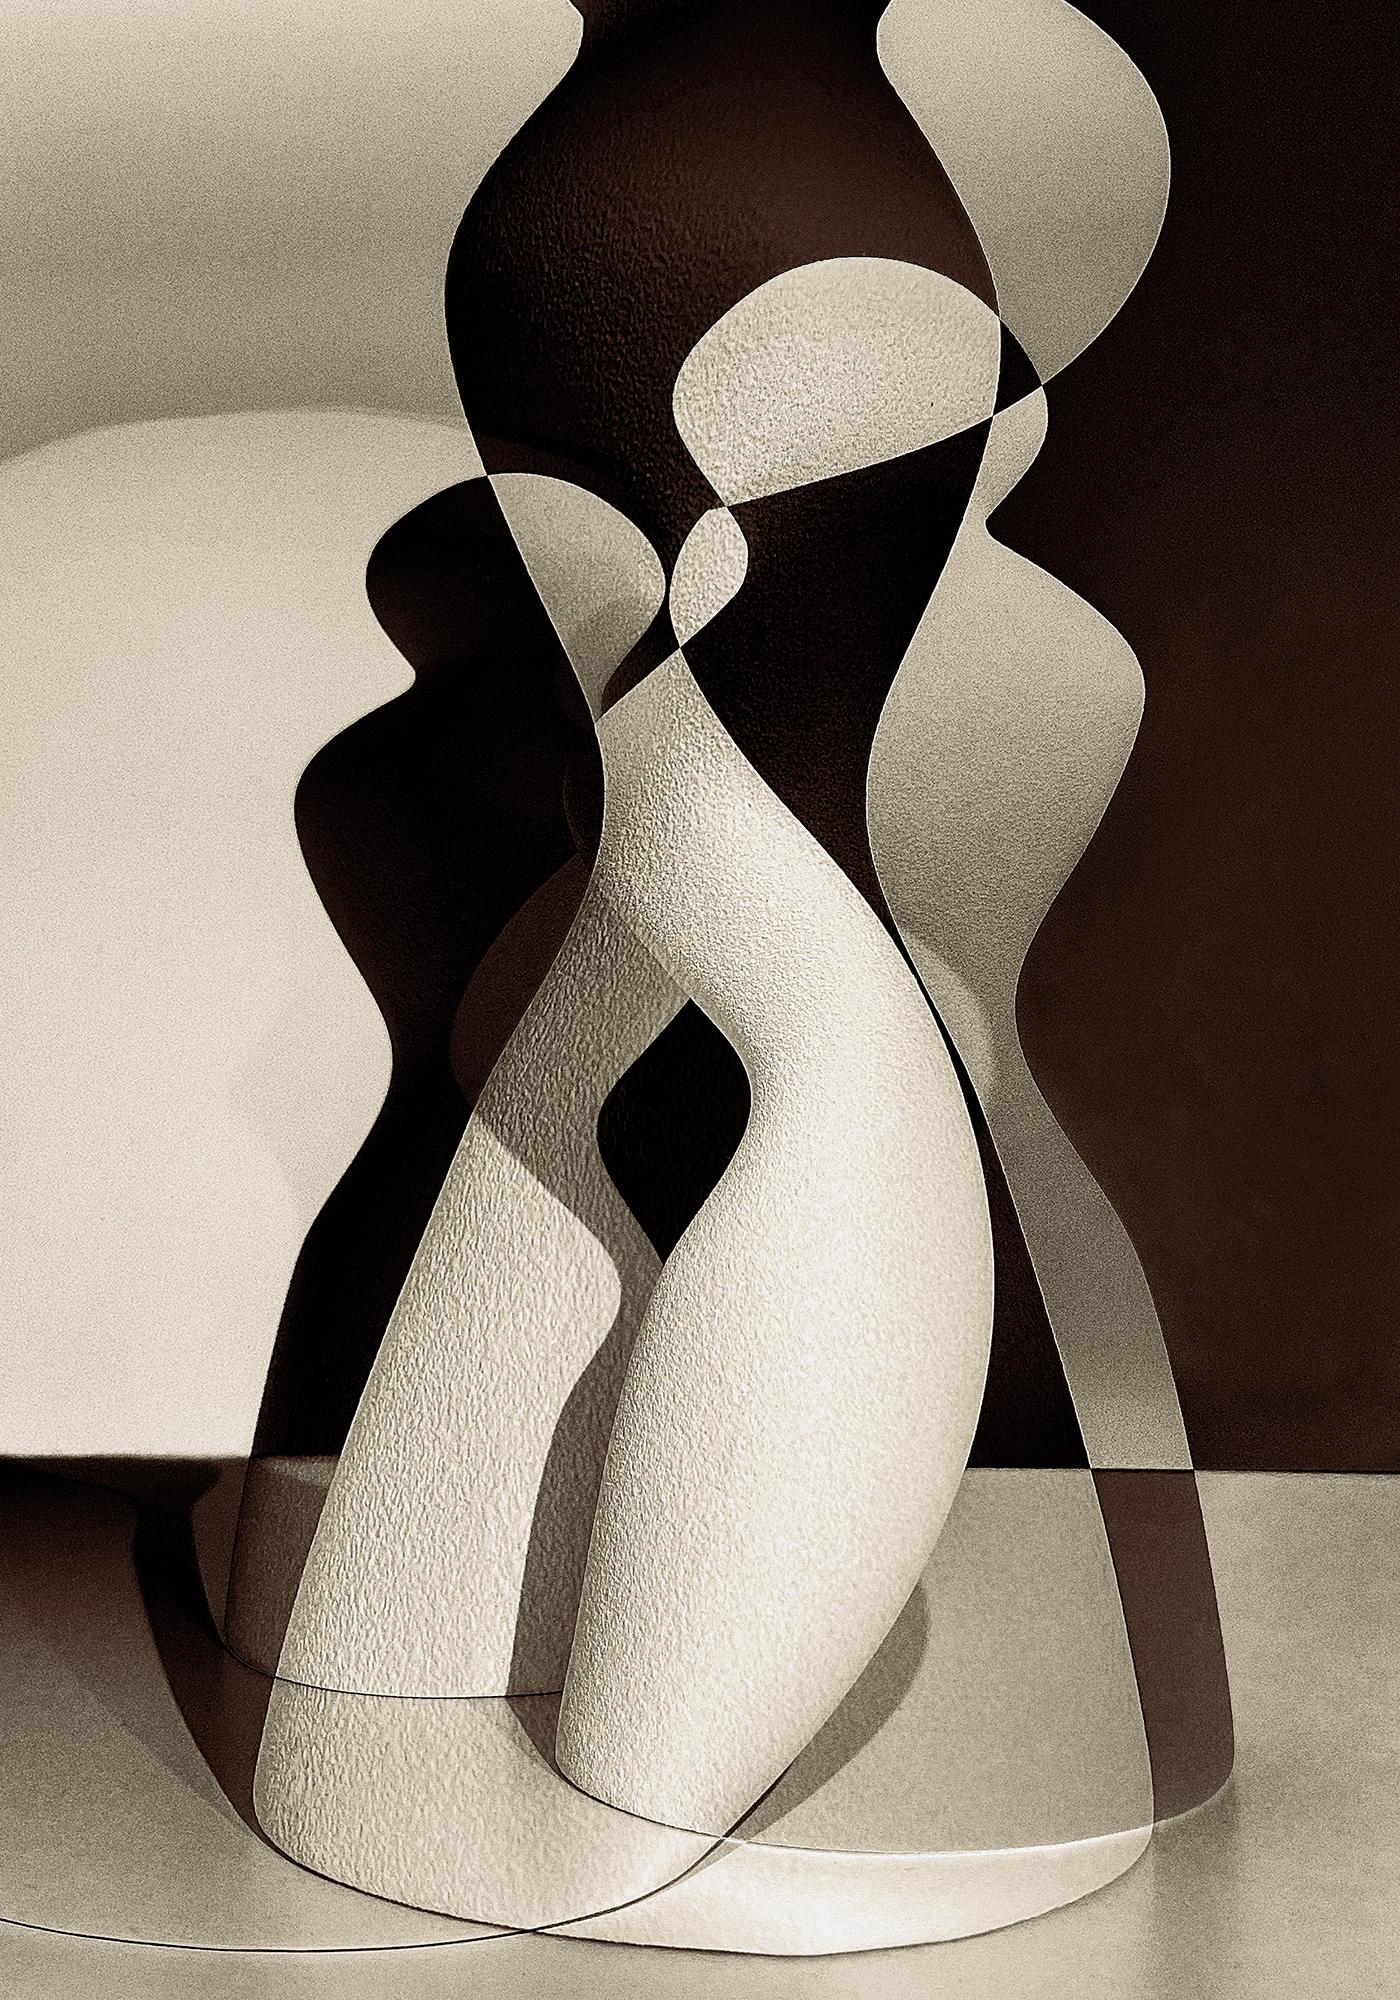 Figurative Print Sander Vos - In Between the shadows, sculpture cubiste, impressions abstraites de figures féminines